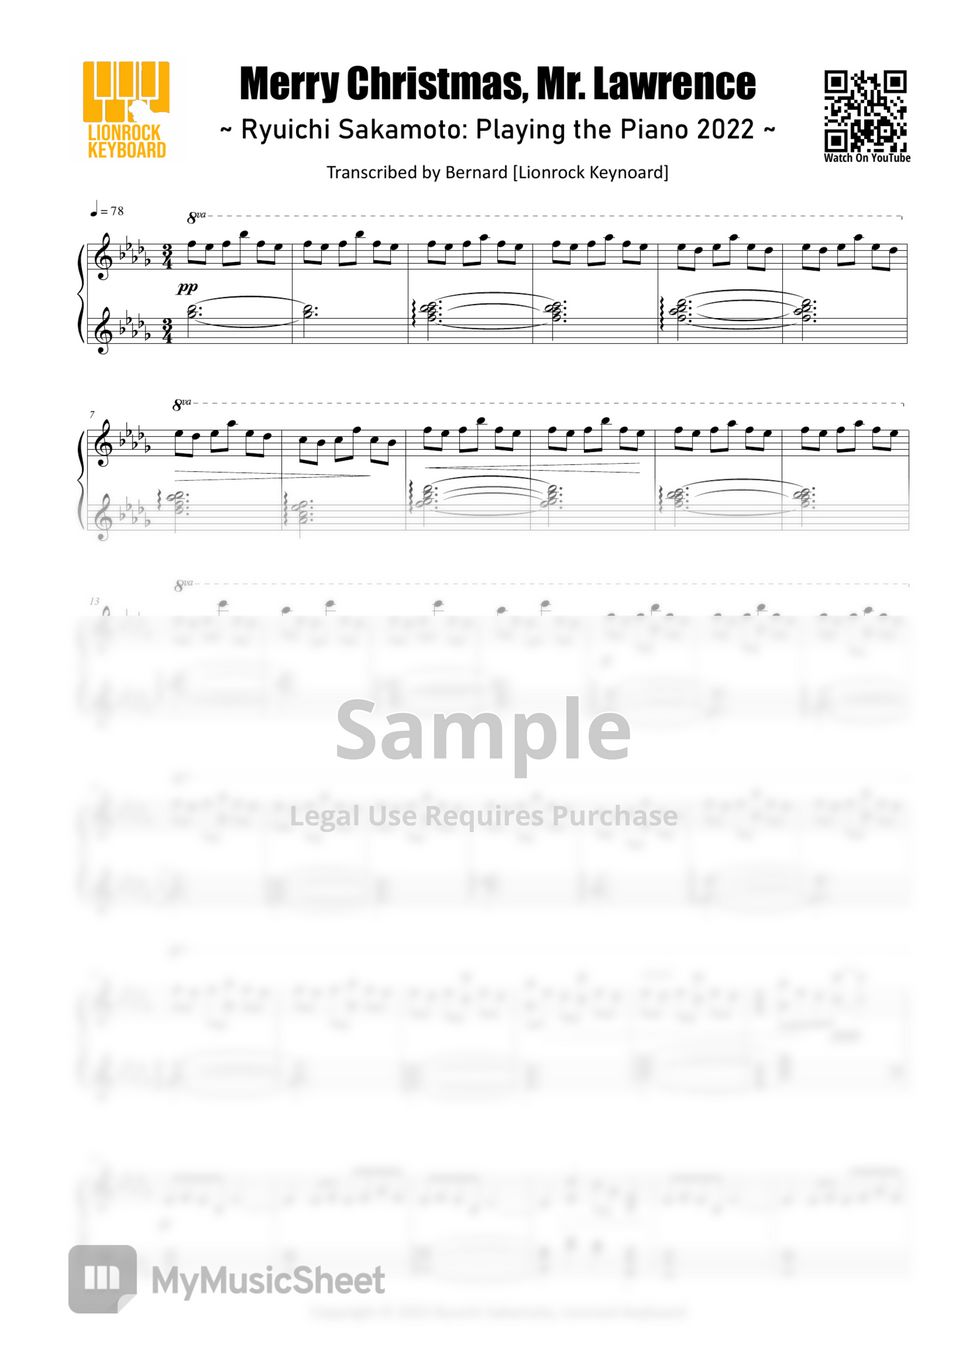 Ryuichi Sakamoto - Merry Christmas Mr. Lawrence (Ryuichi Sakamoto: Playing The Piano 2022 Transcription) by Bernard Hui